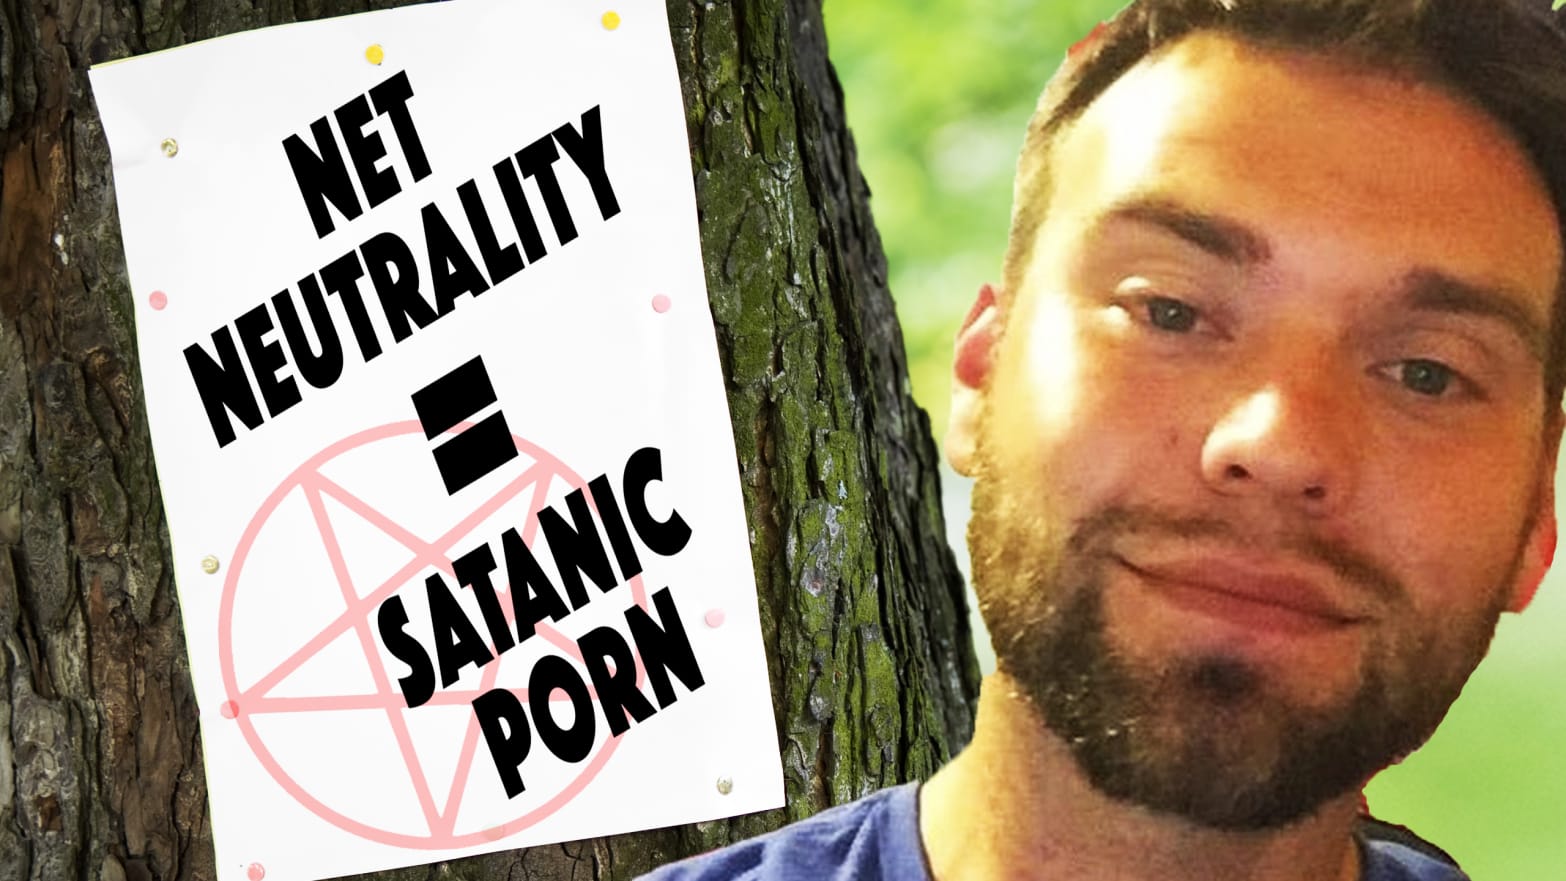 Satanist Porn - Alt-Right Claims Net Neutrality Promotes 'Satanic Porn' in ...